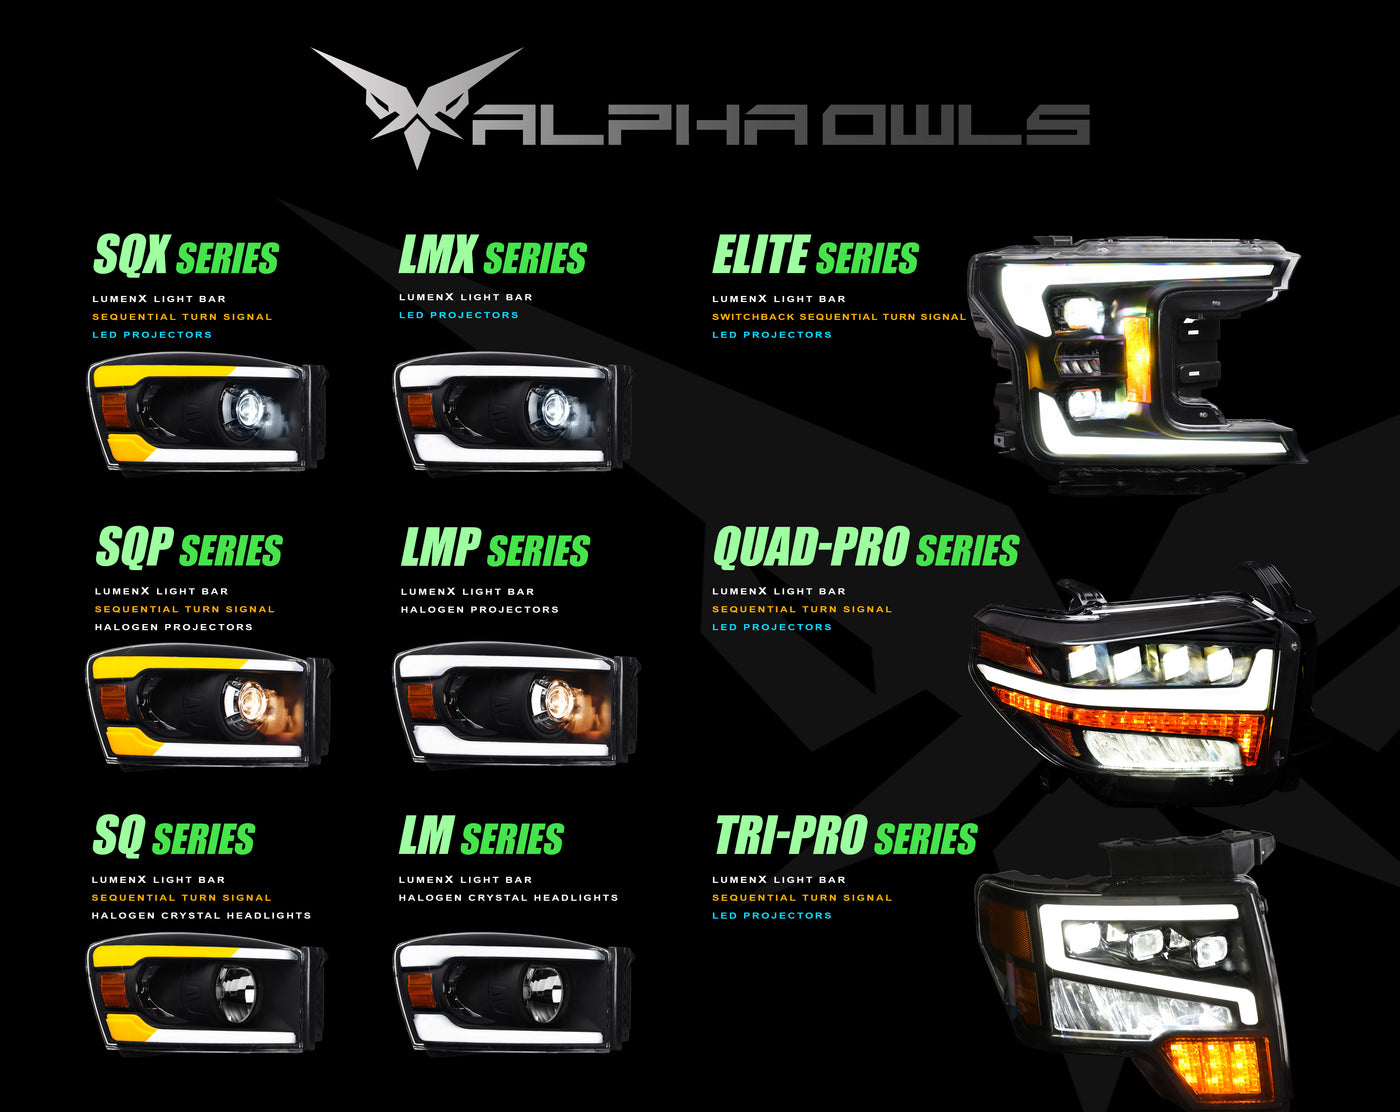 Alpha Owls Headlights, Chevy Headlights, Tahoe Headlights, 1995-1999 Headlights, Chrome Headlights, Headlights